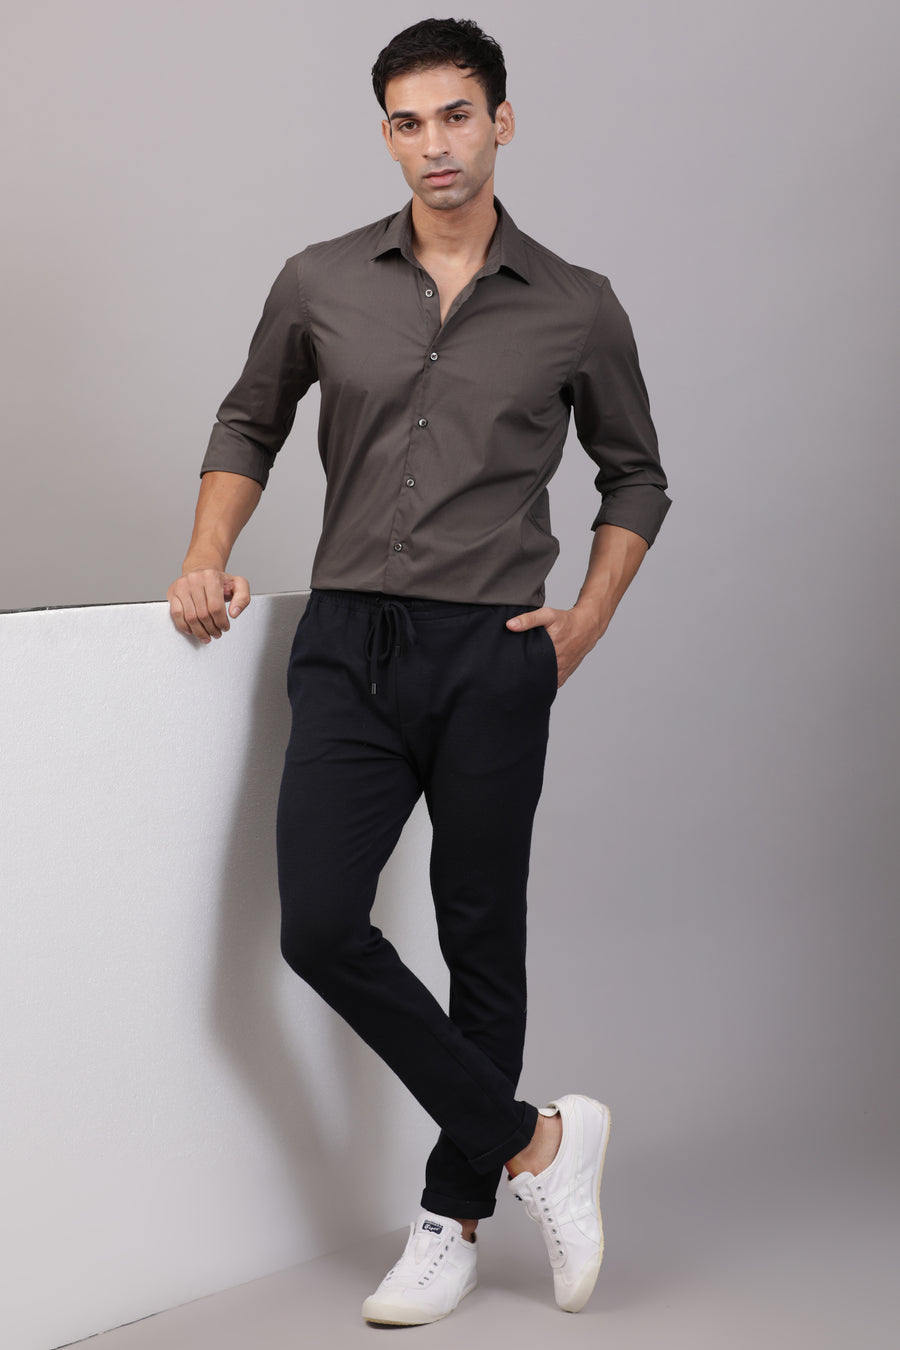 Victor - Satin Solid Shirt - Grey